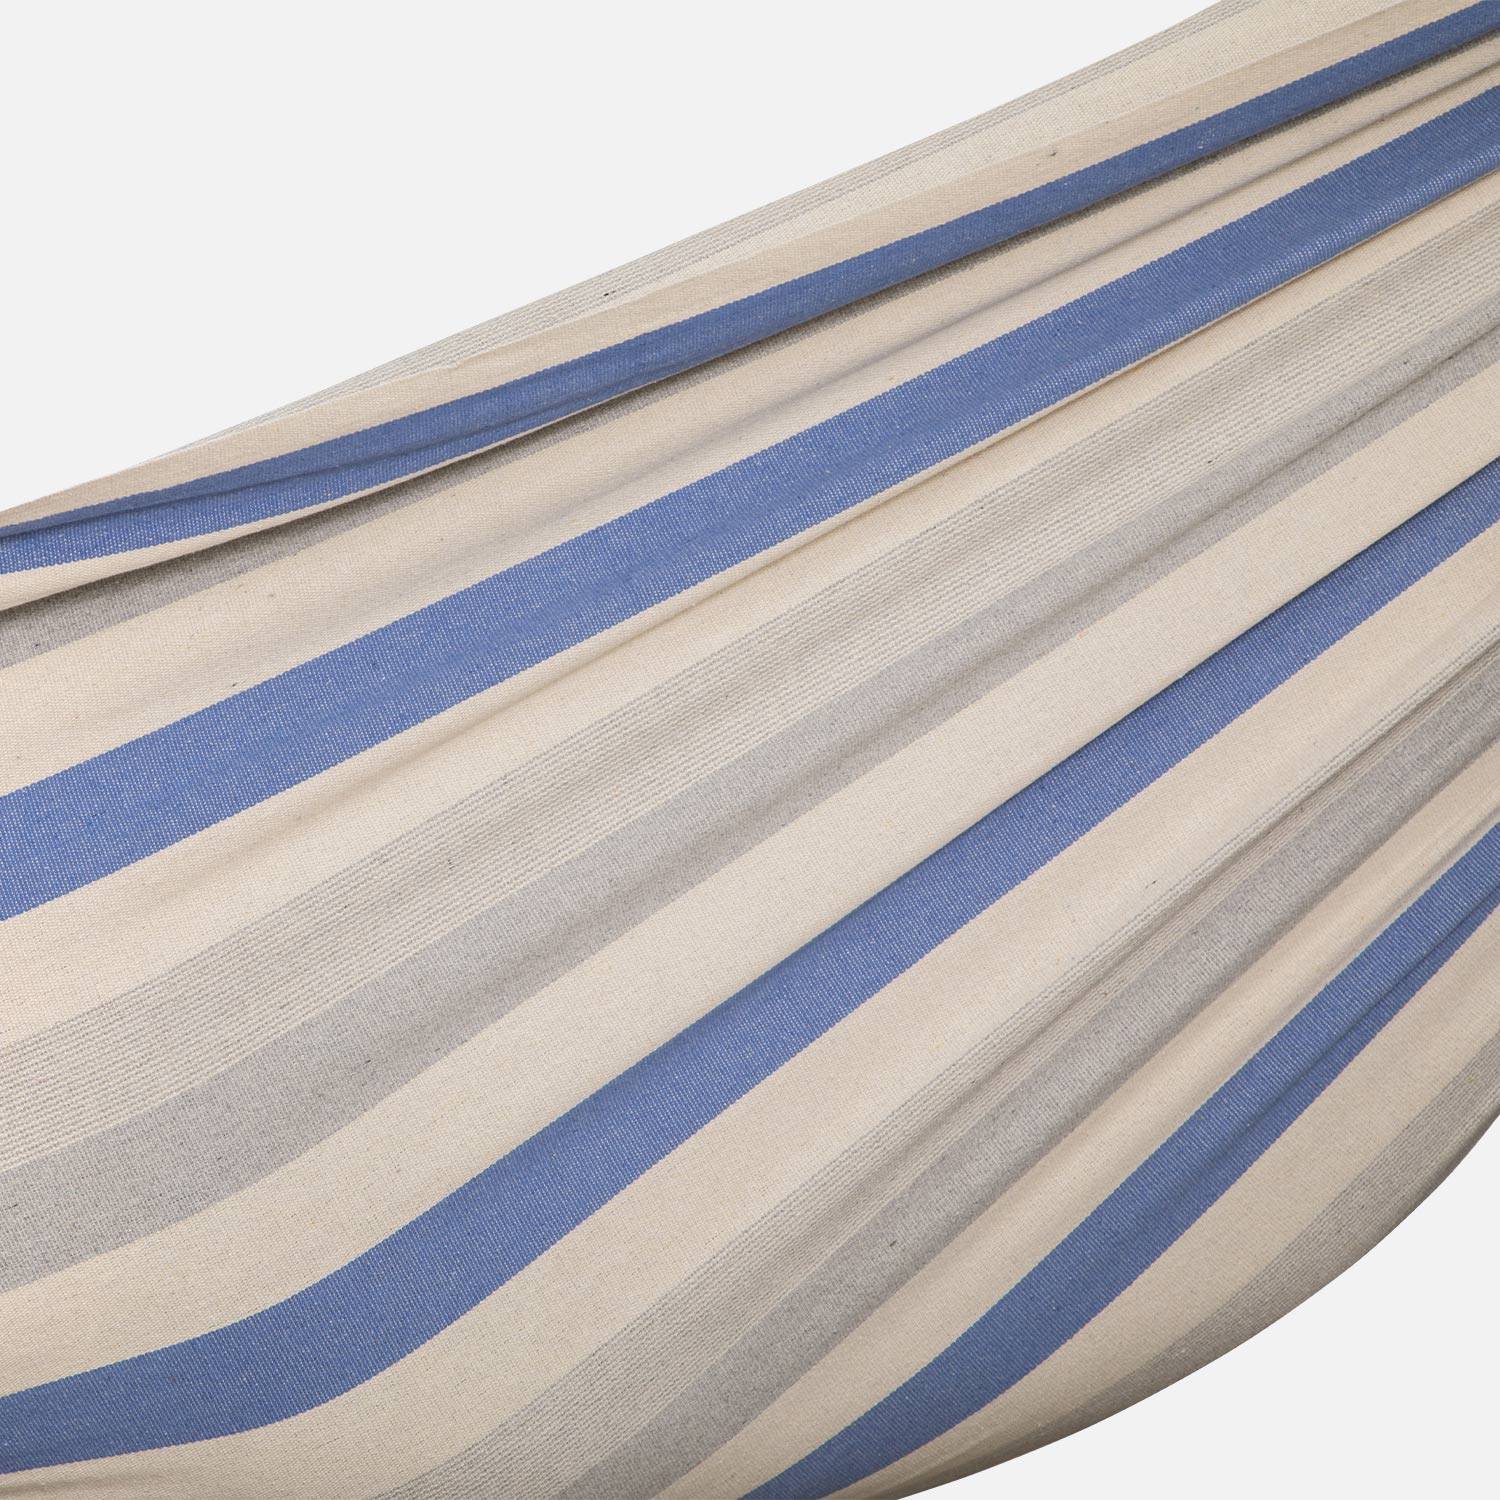 Funda de hamaca a rayas - azul turquesa / gris claro / crudo, 1 persona, 100% polialgodón, 240x160cm,sweeek,Photo5